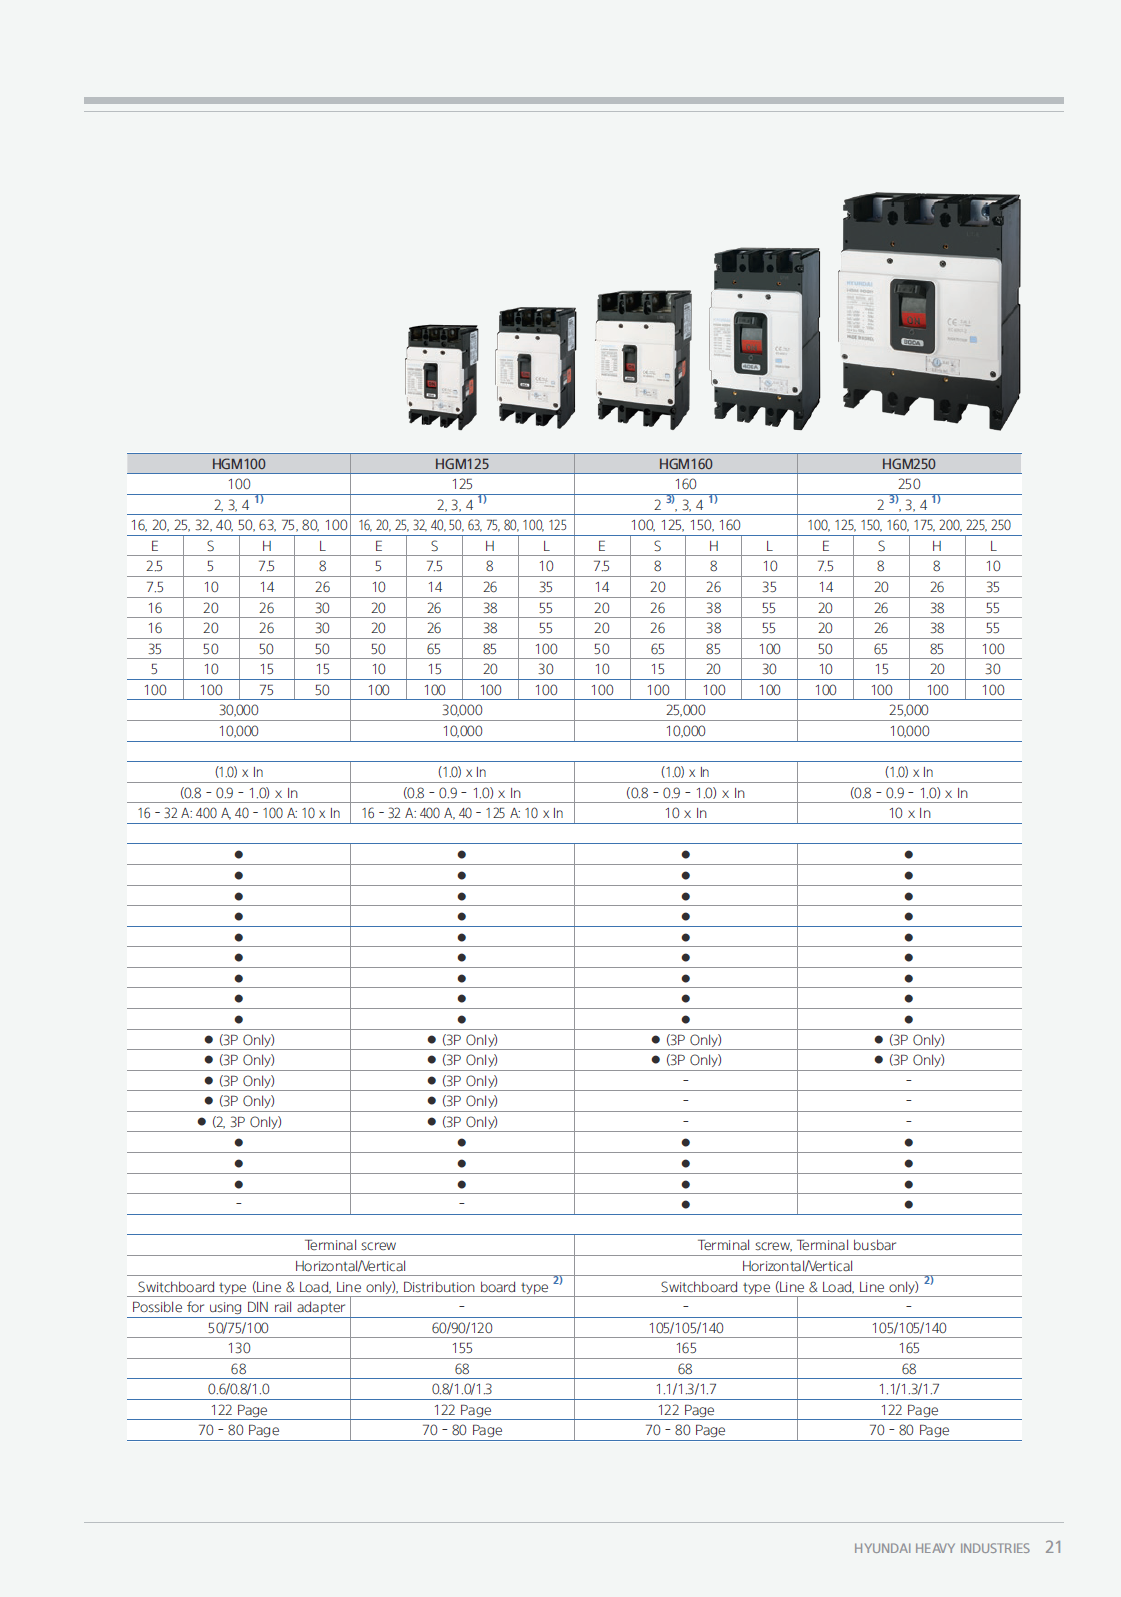 Hyundai Marine Circuit Breaker (MCCB) - HGM100E 2P Fixed / Plug-in Type